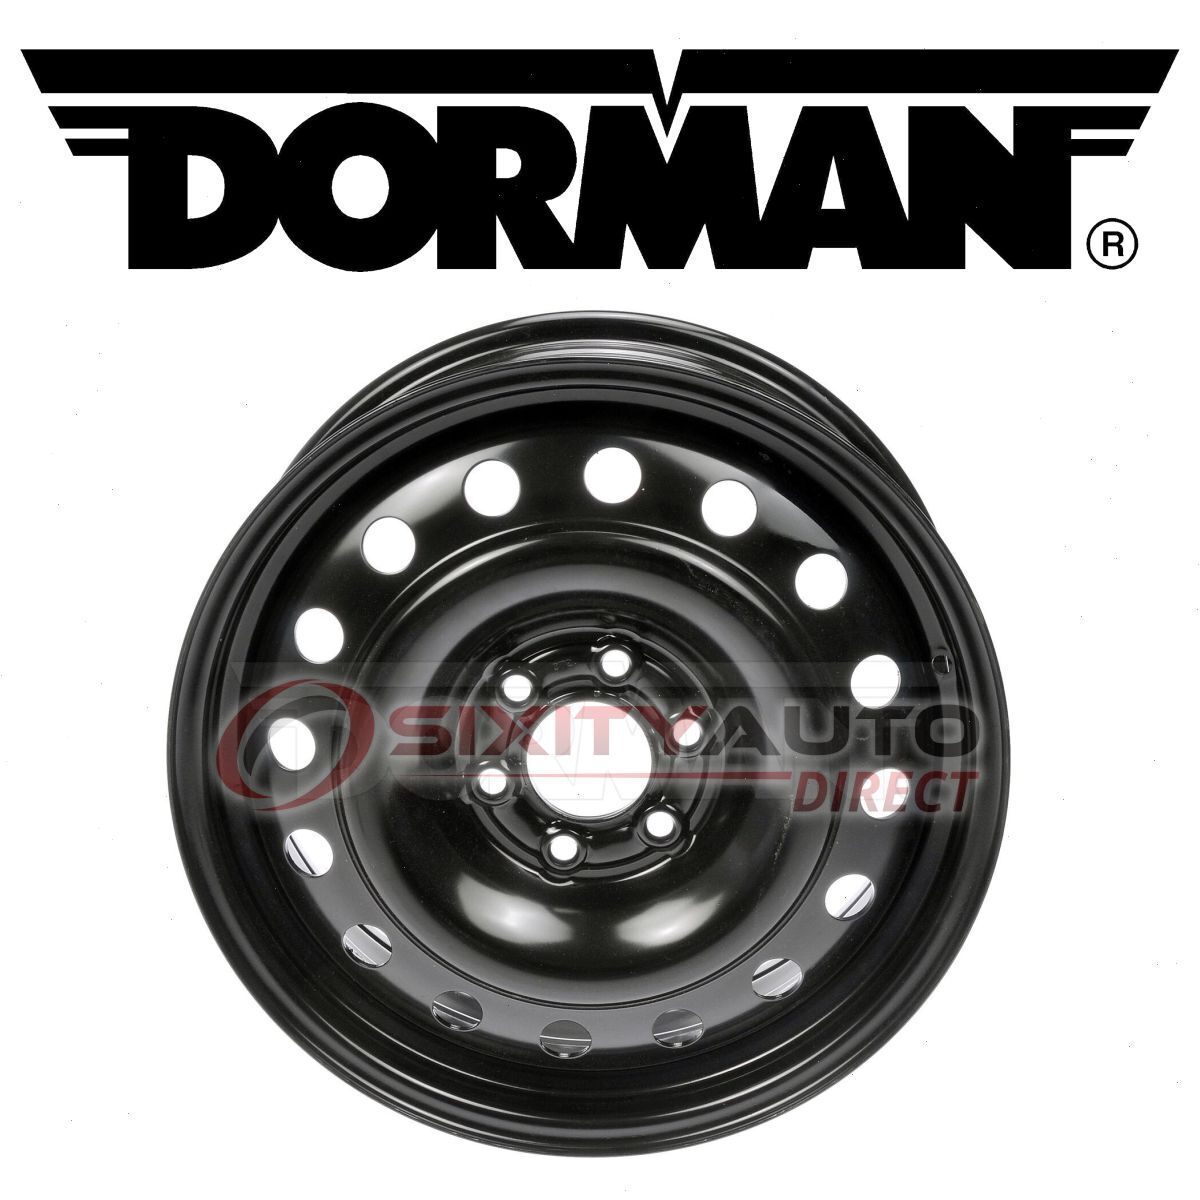 Dorman Wheel for 2006-2007 Buick Terraza Tire  nv